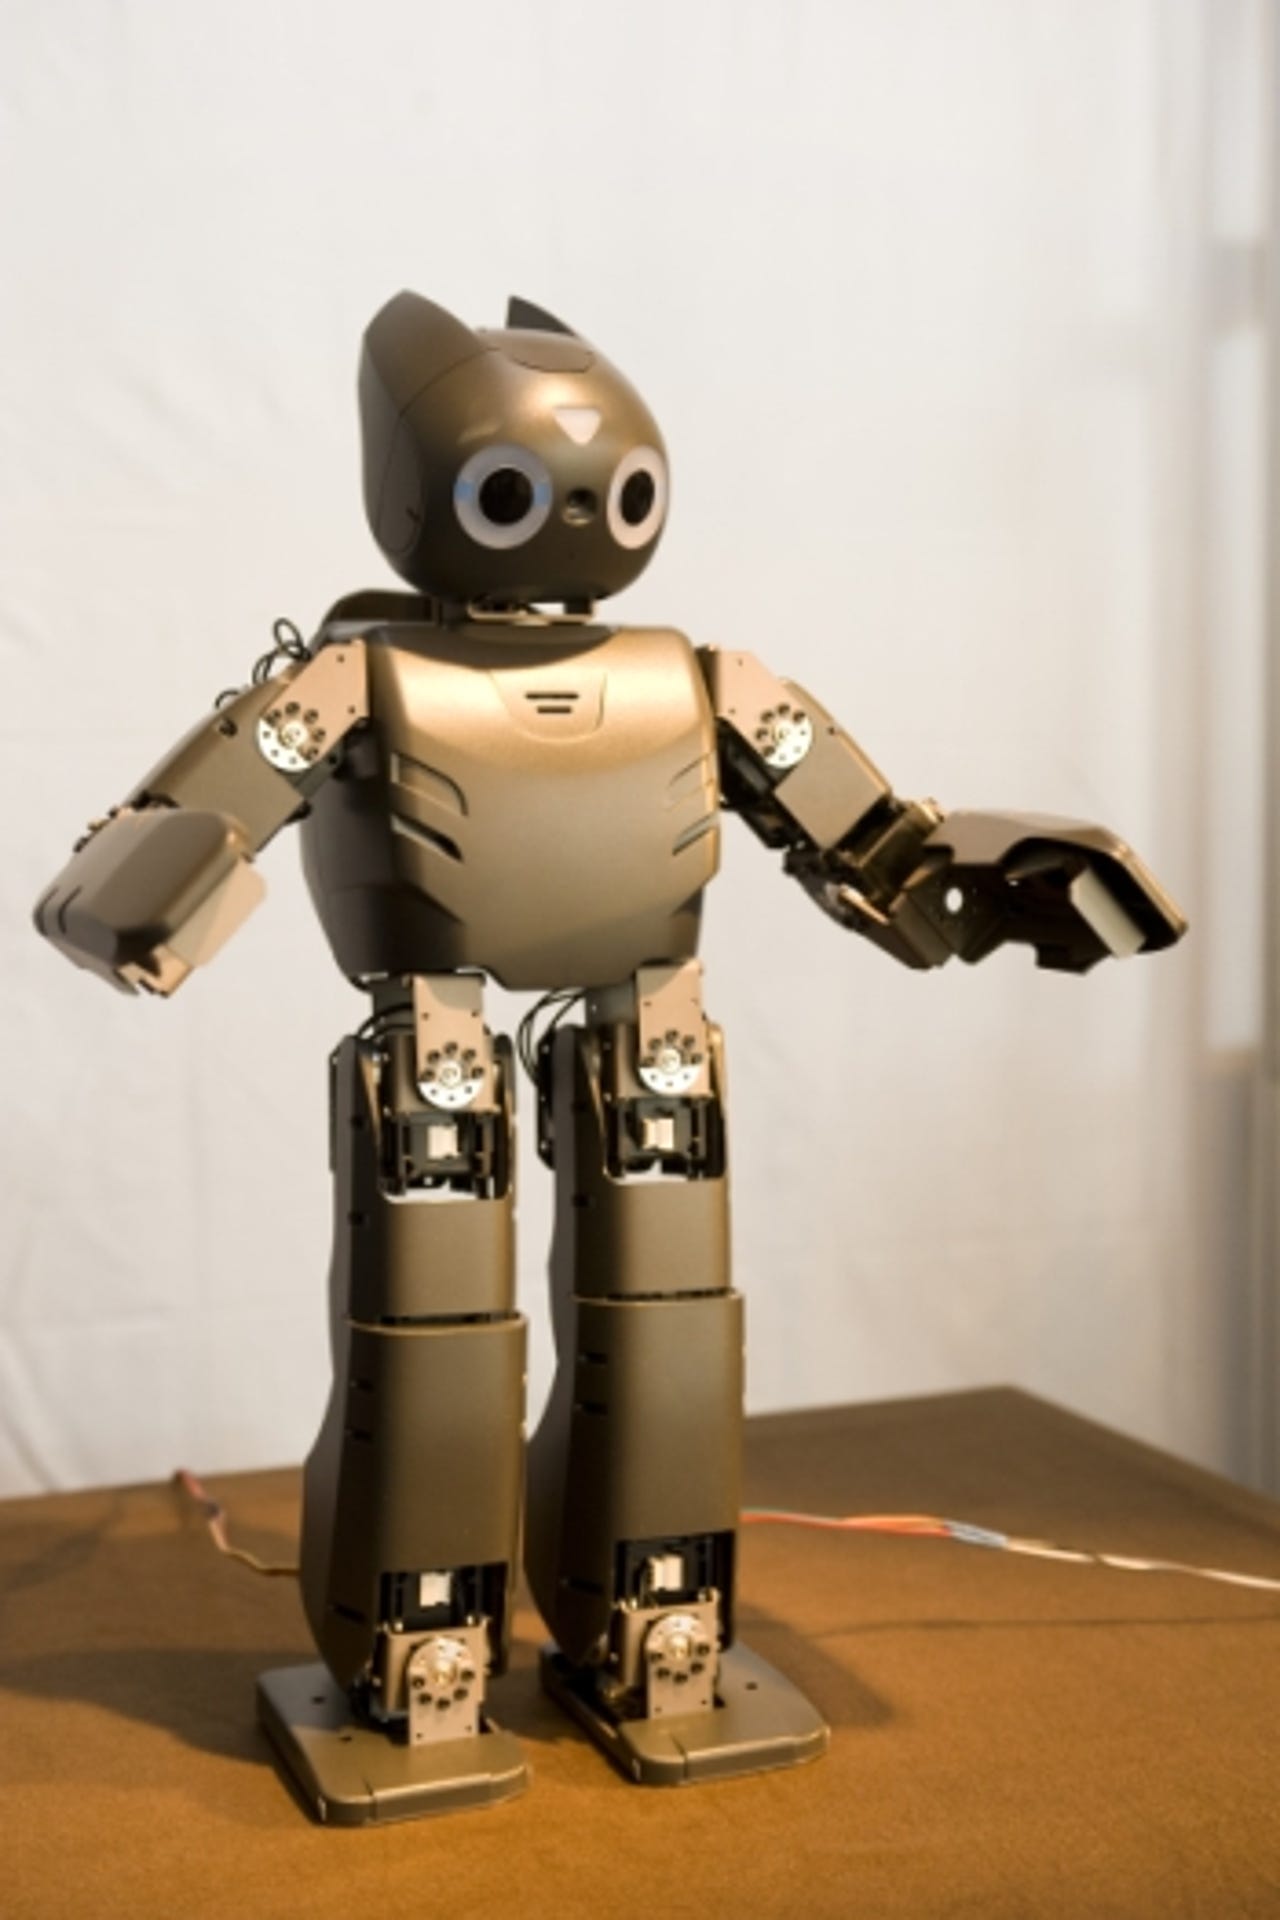 40154266-2-humanoid-robot-innorobo-350-525.jpg